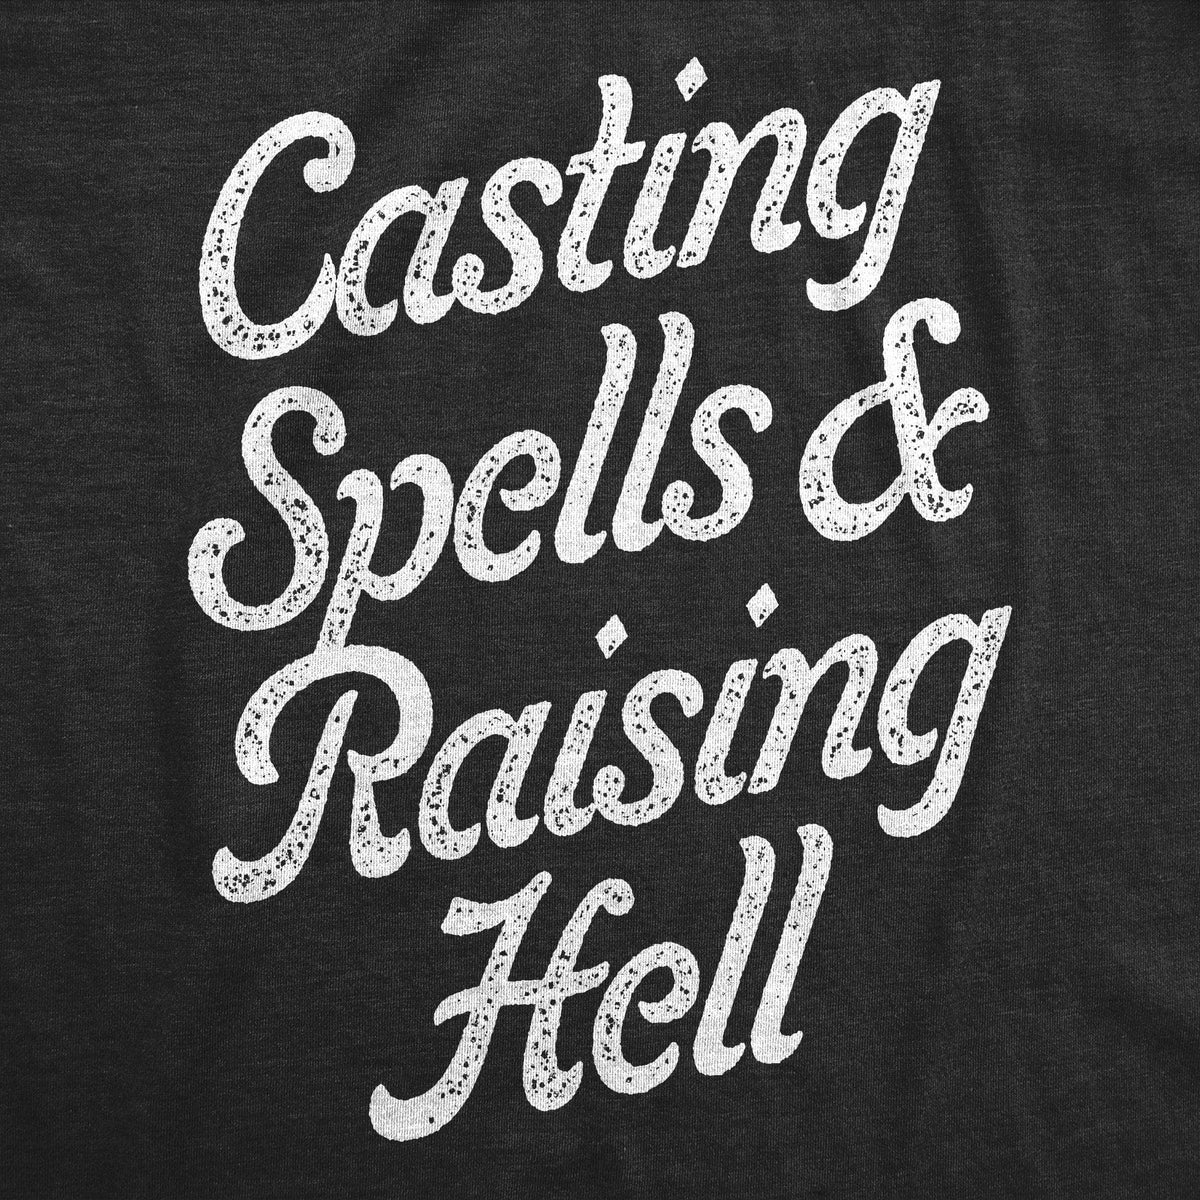 Casting Spells And Raising Hell Women&#39;s Tshirt  -  Crazy Dog T-Shirts